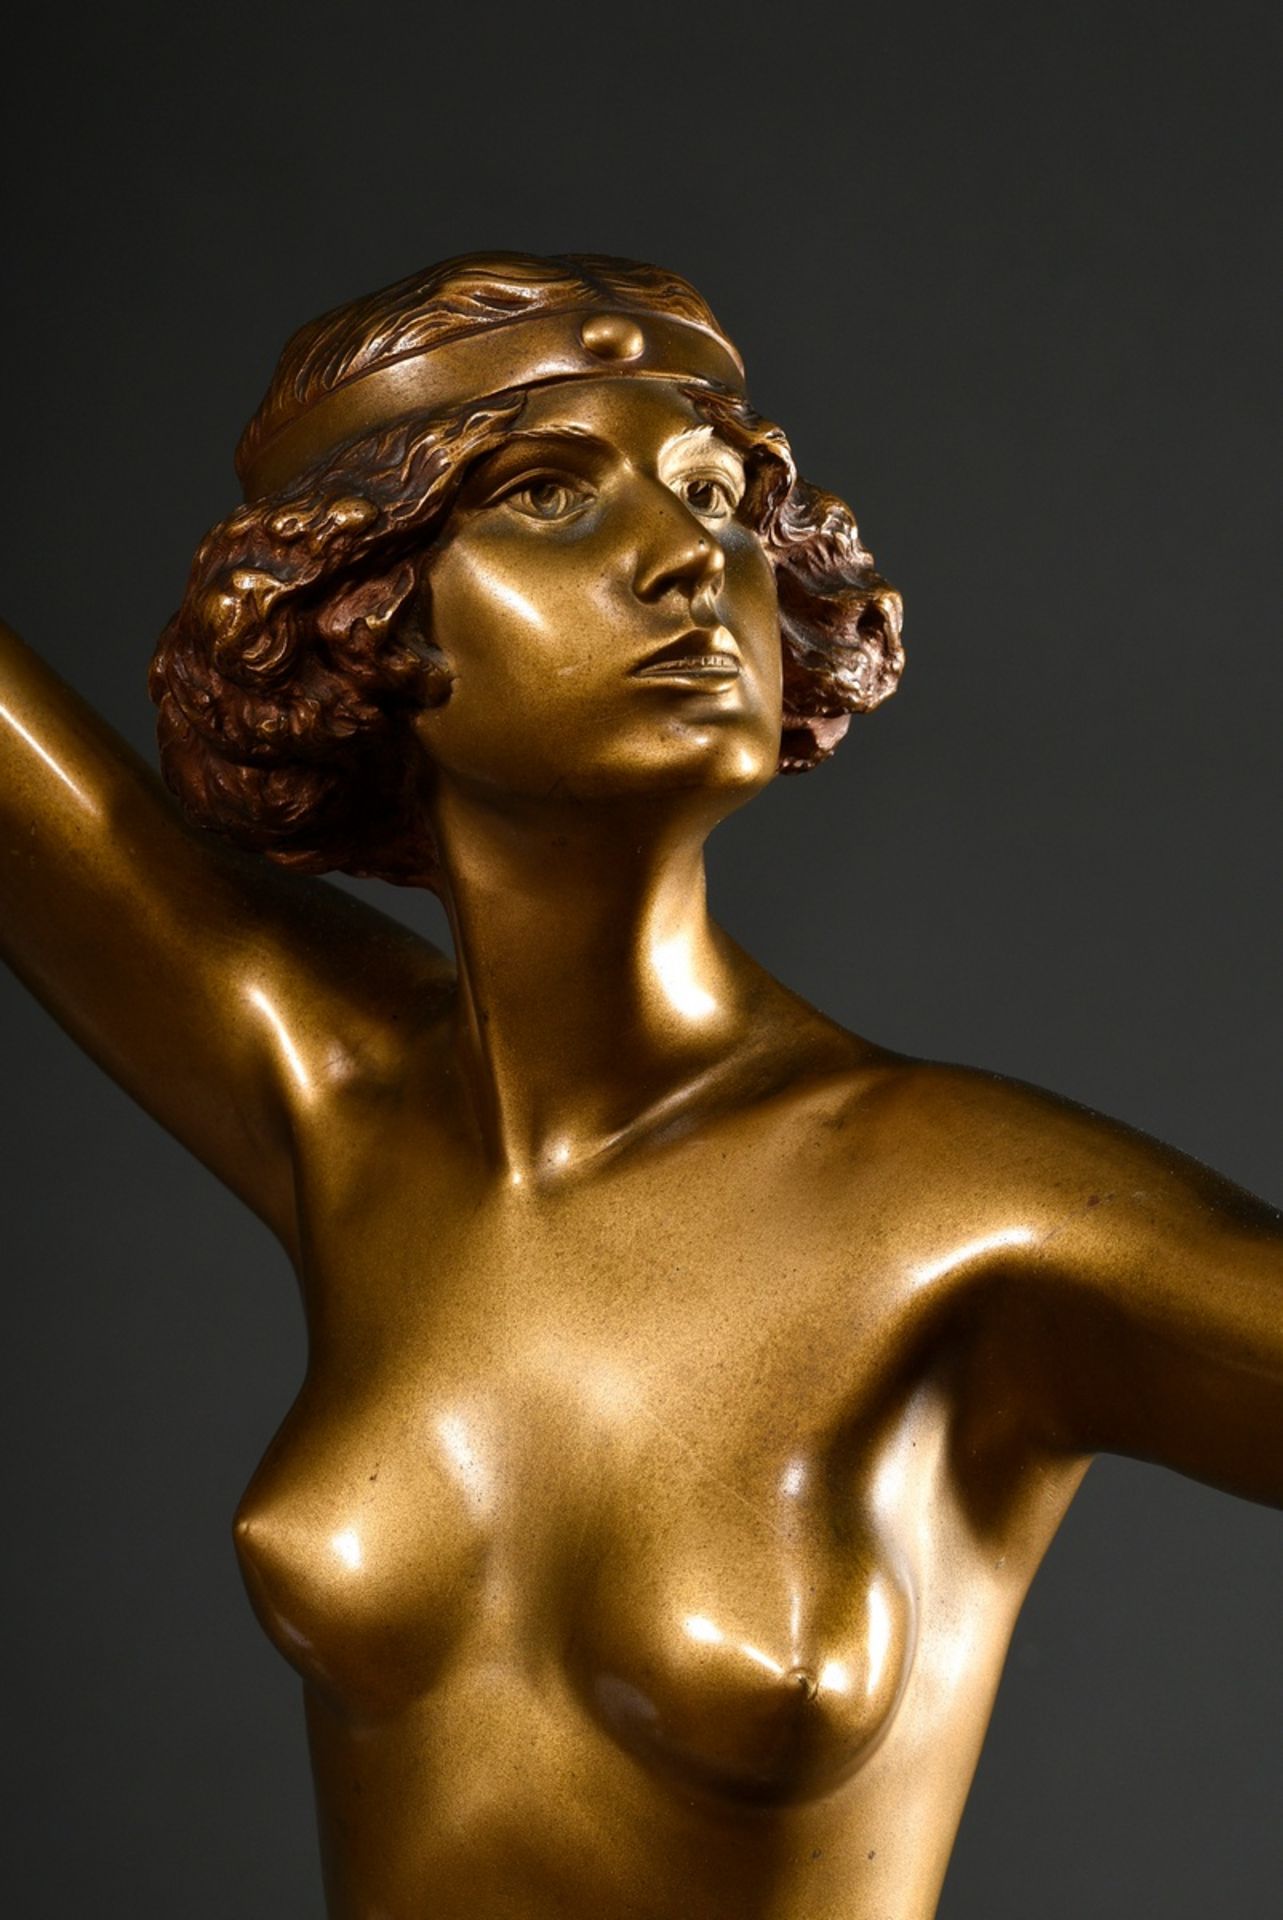 Jaeger, Gotthilf (1871-1933) "Sabre Dancer", around 1925, bronze with gold patina on grey marble pl - Image 2 of 10